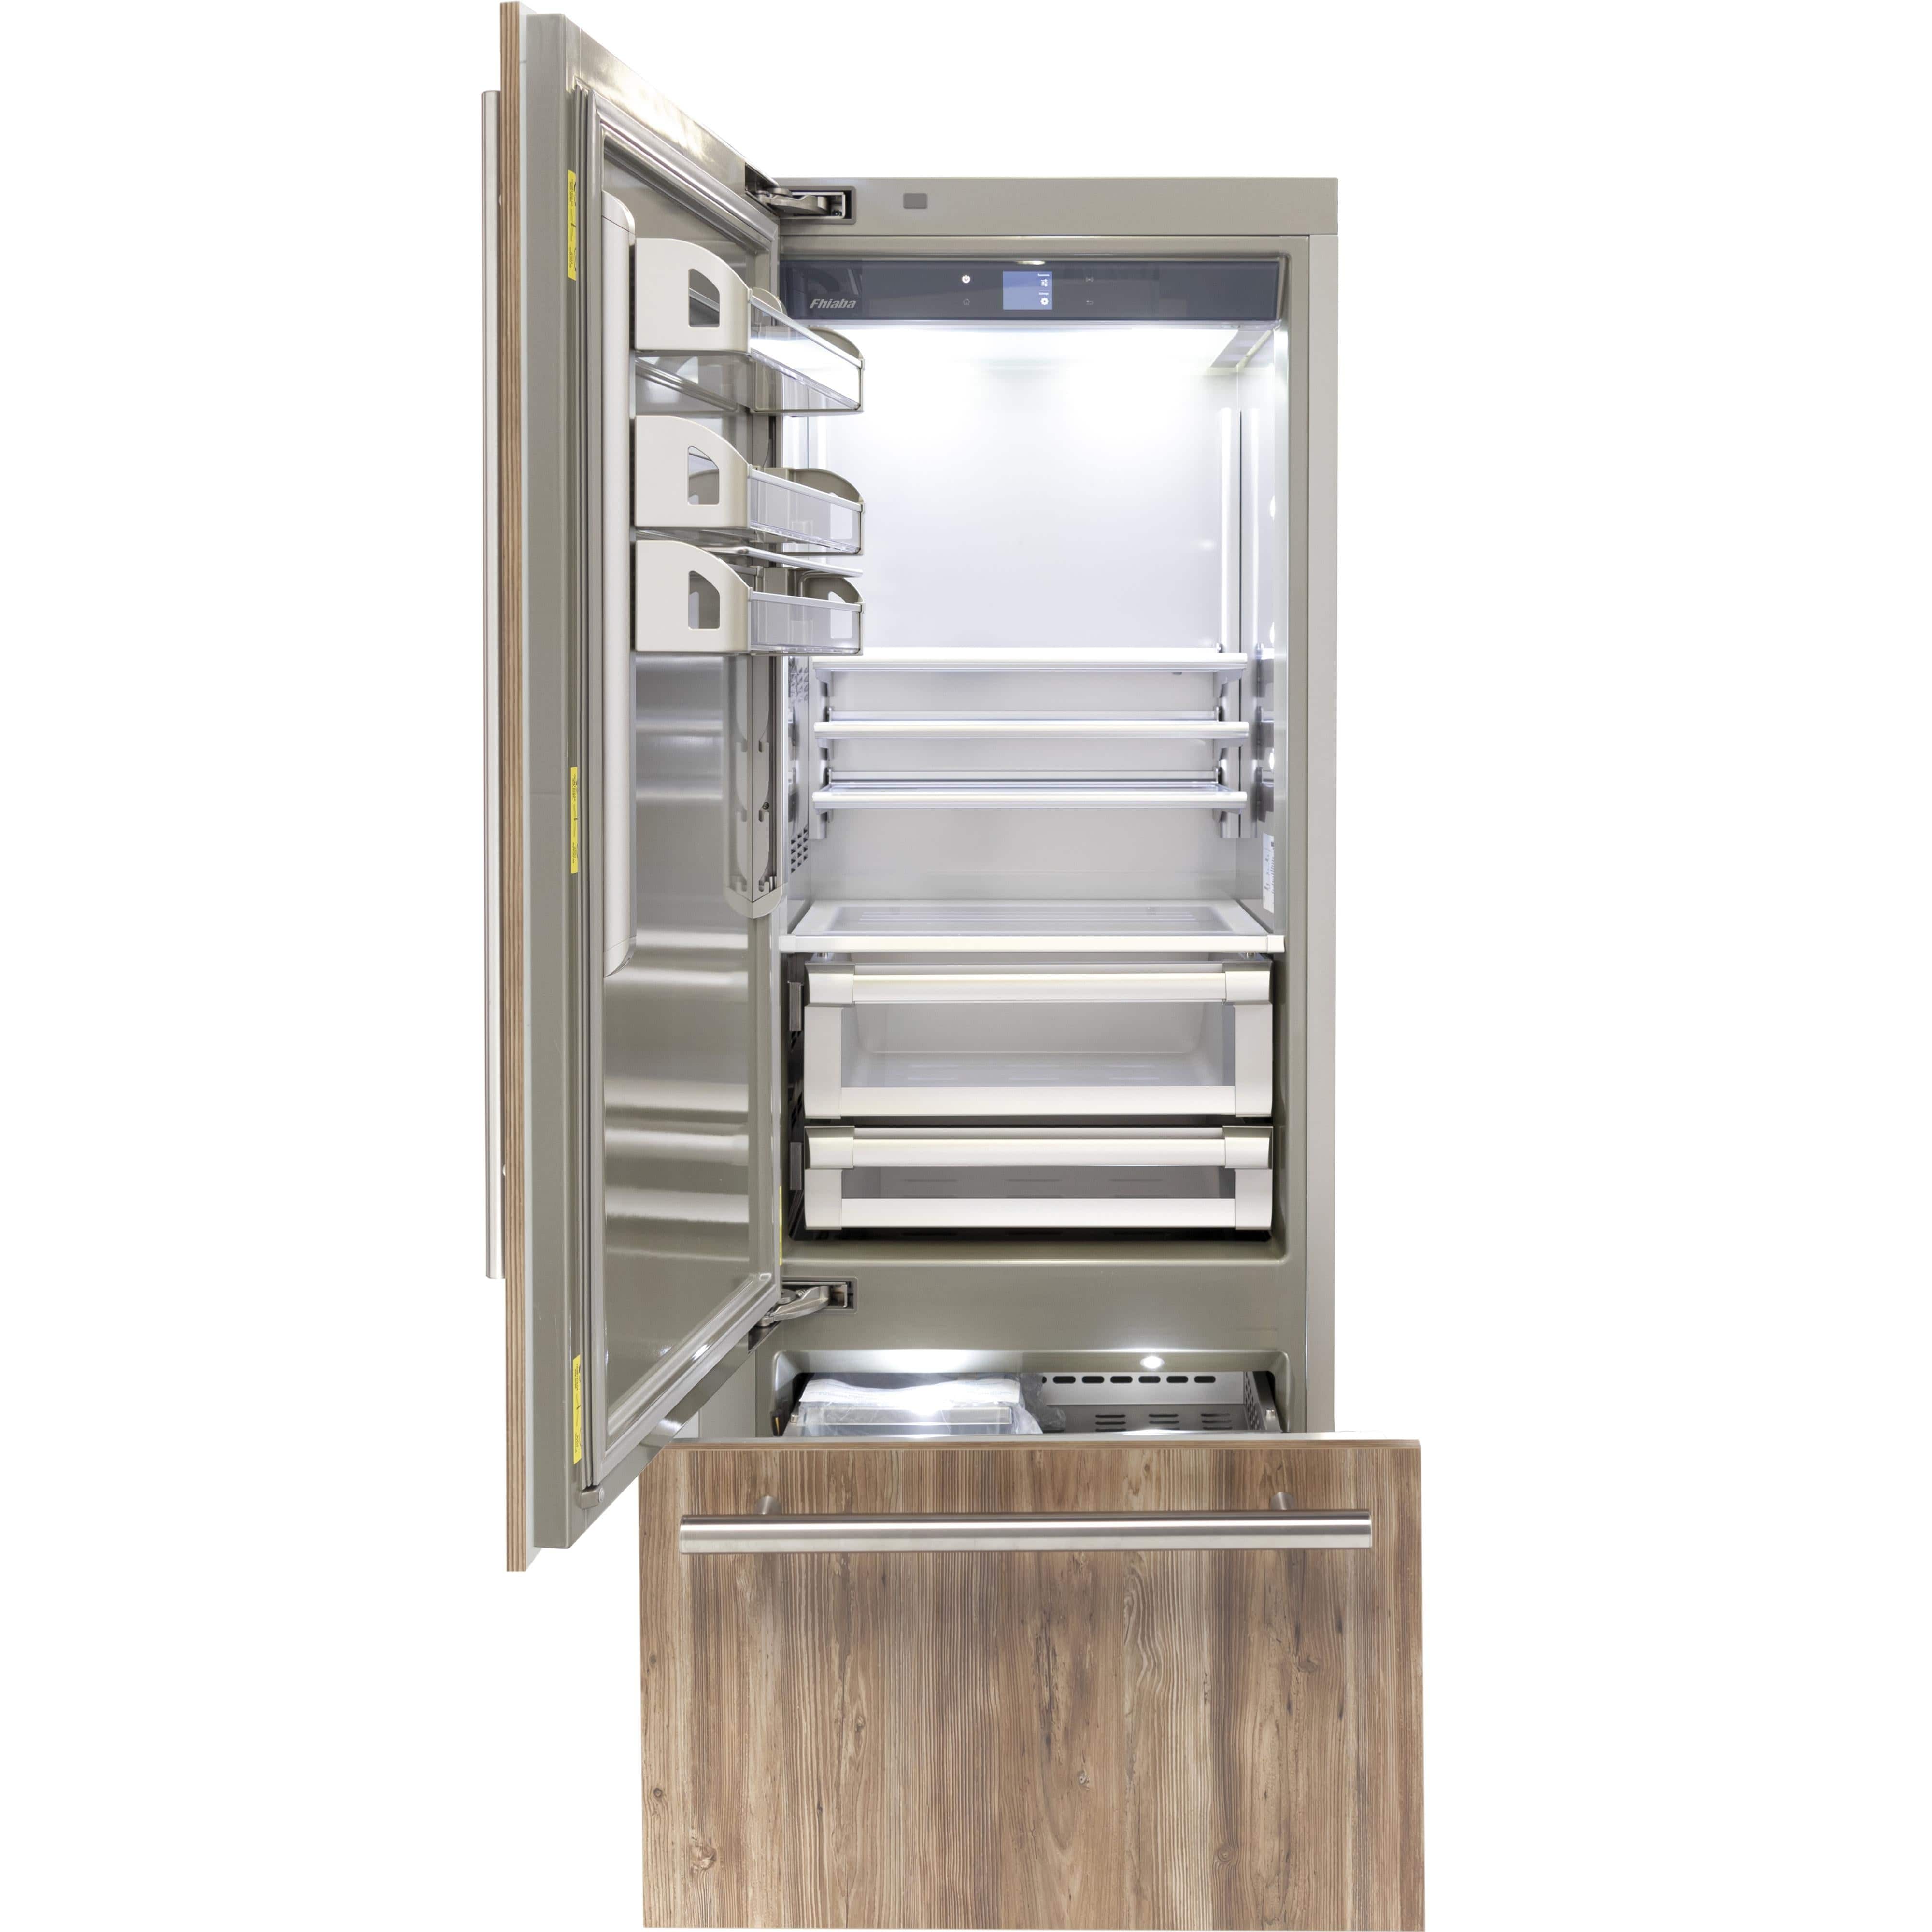 Fhiaba 30-inch, 14.5 cu.ft. Built-in Bottom Freezer Refrigerator with Interior Ice Maker FI30BI-LO1 Refrigerators FI30BILO1 Luxury Appliances Direct